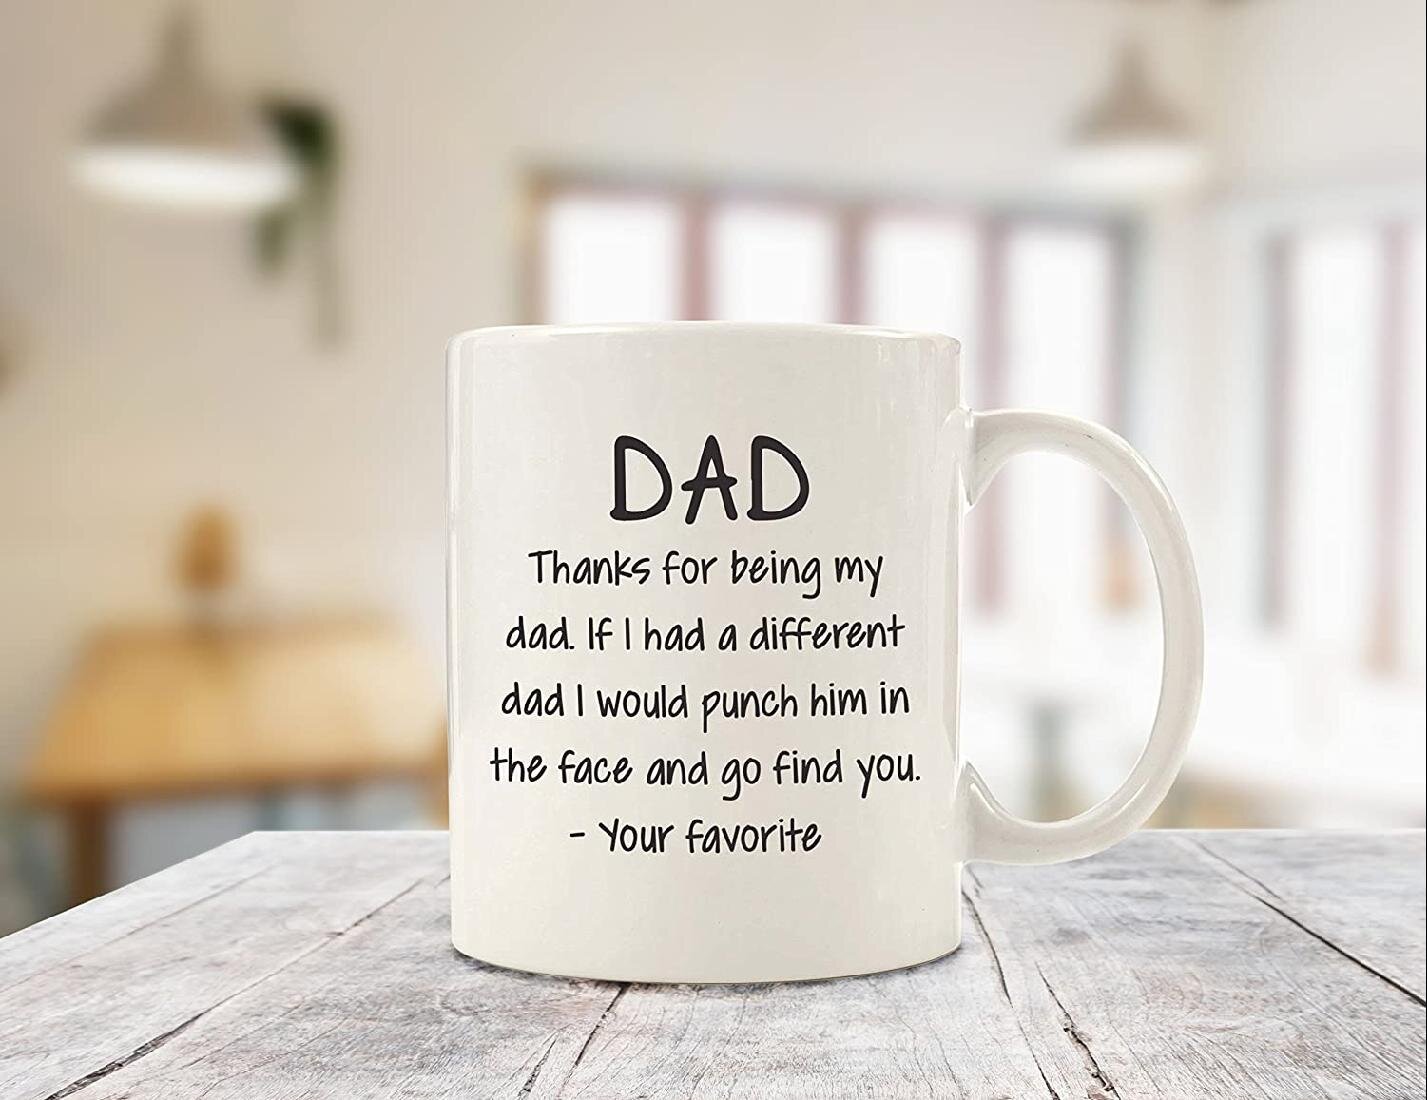 FOXTROT Funny Mug HIS Gift for Dad Fathers Day Birthday christmas SECRET SANTA 